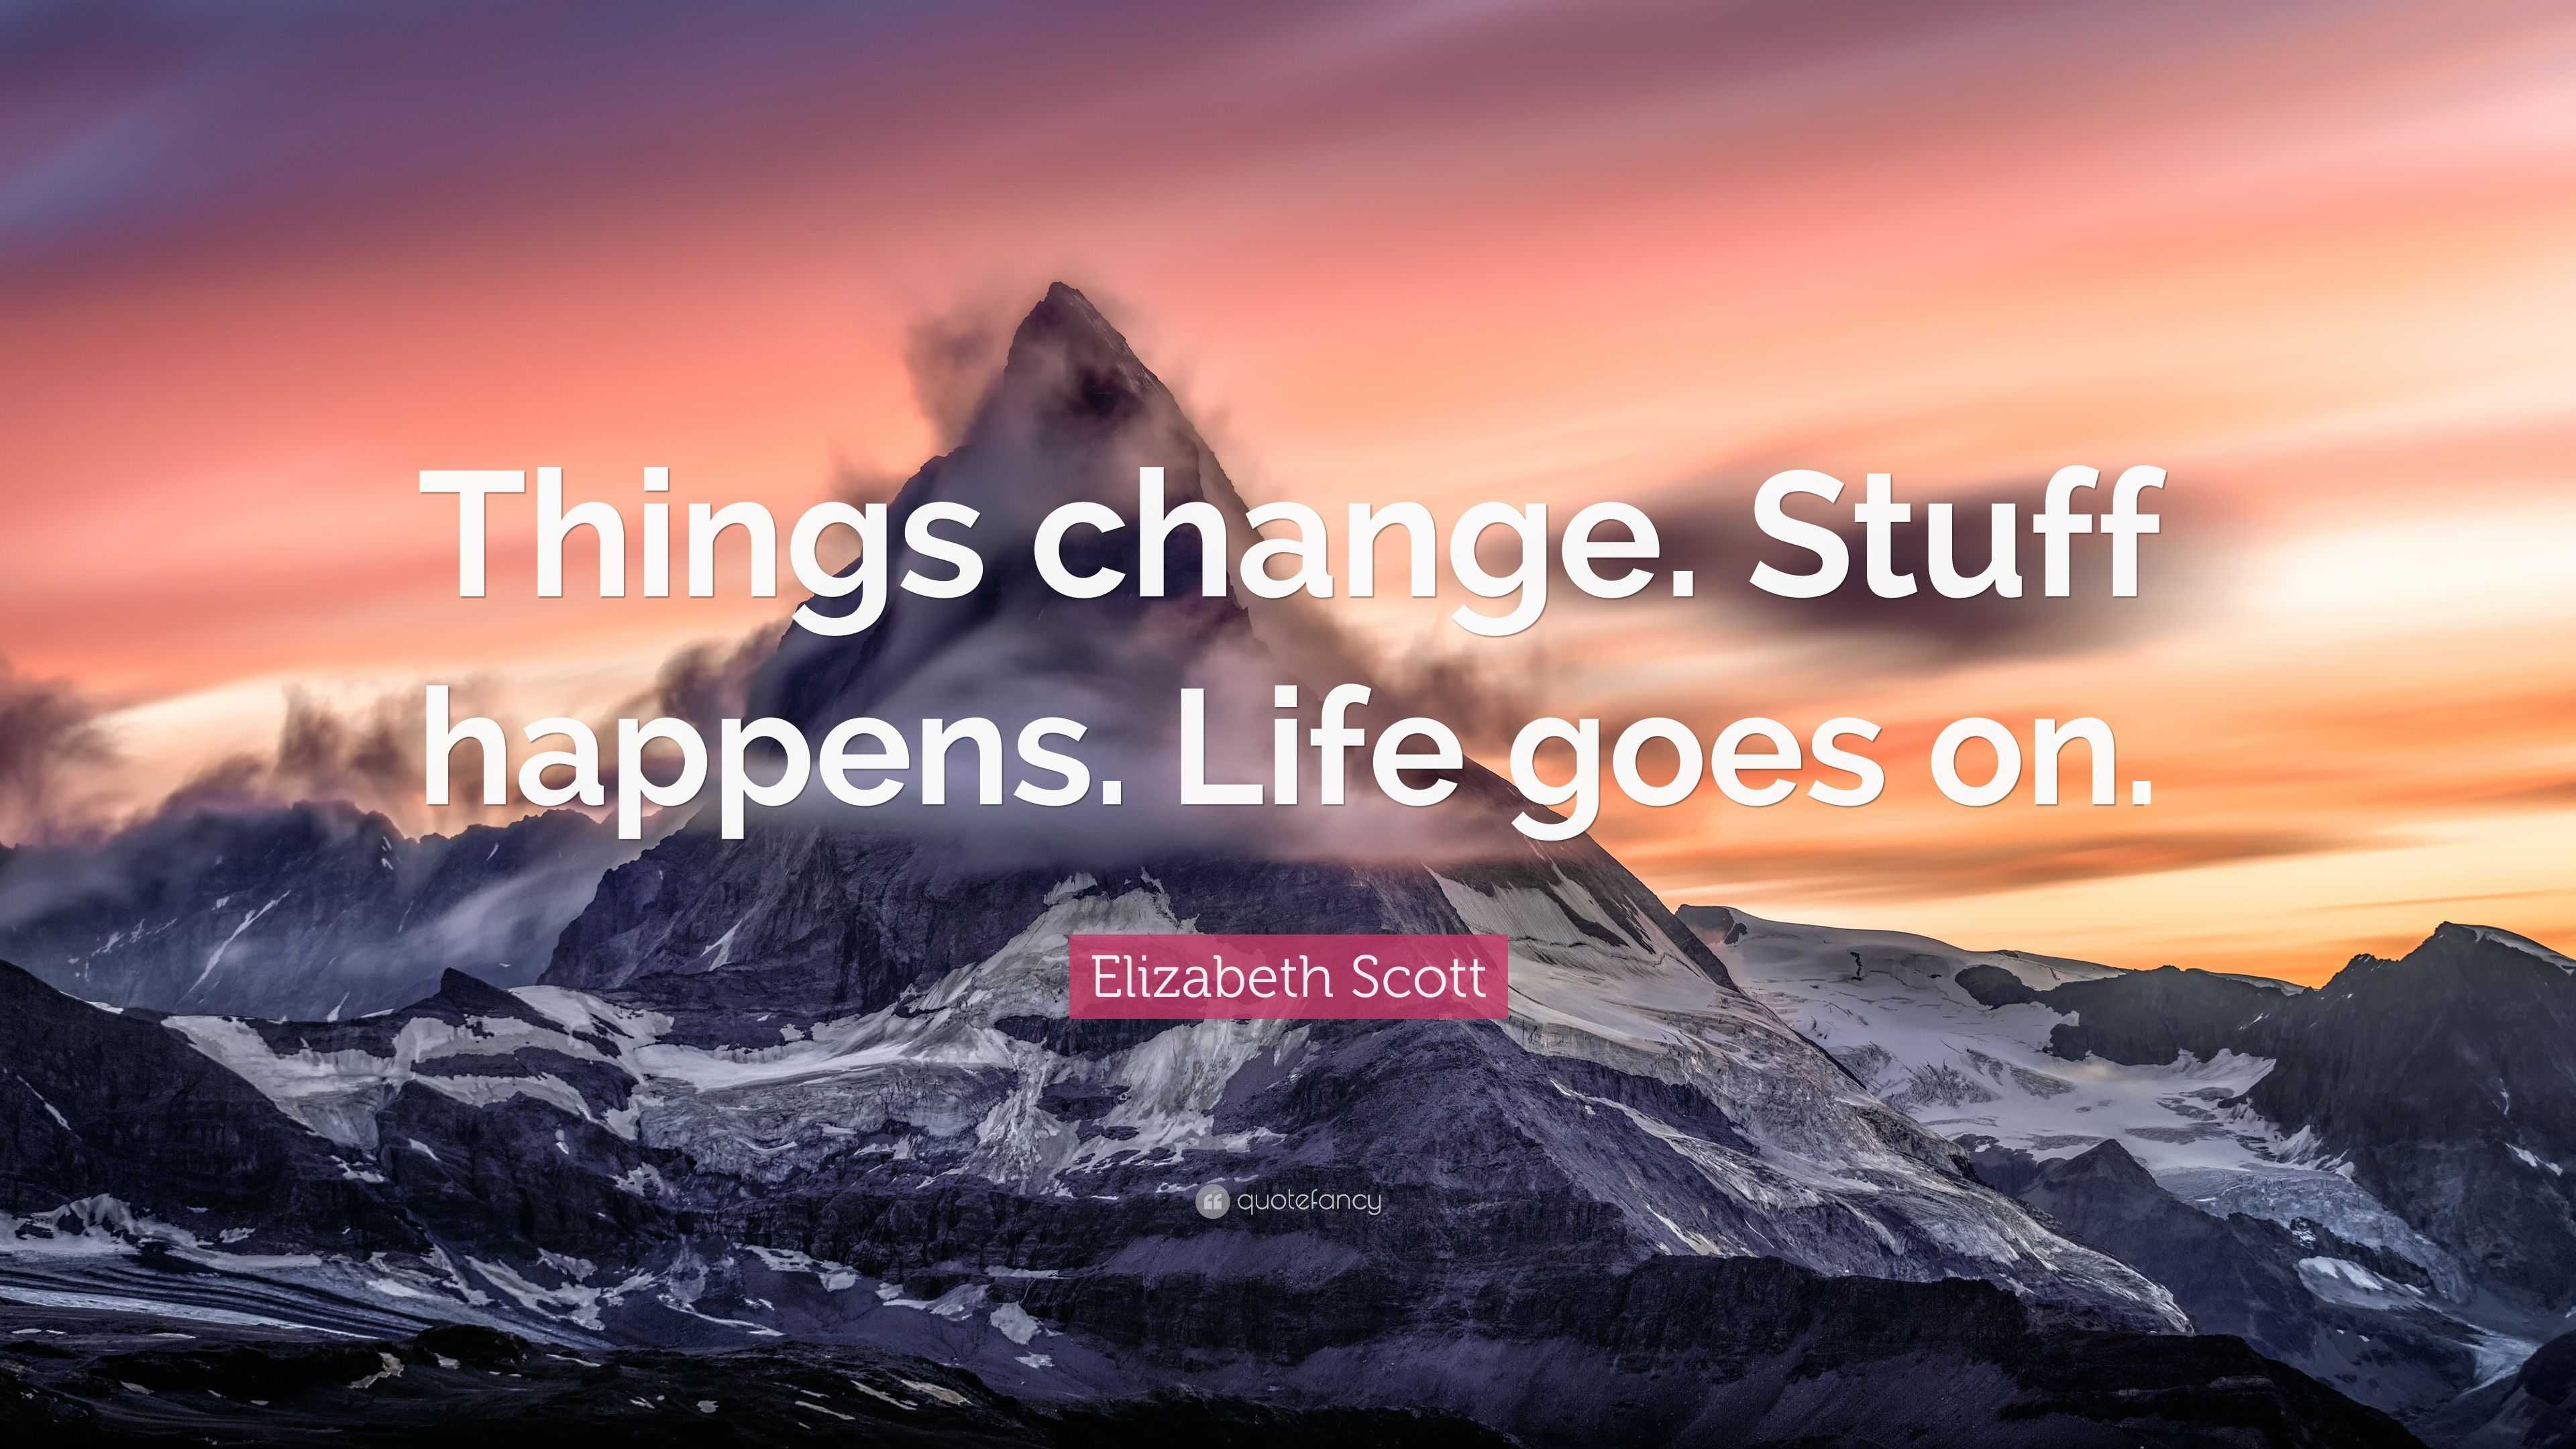 Elizabeth Scott Quote “Things change Stuff happens Life goes on ”